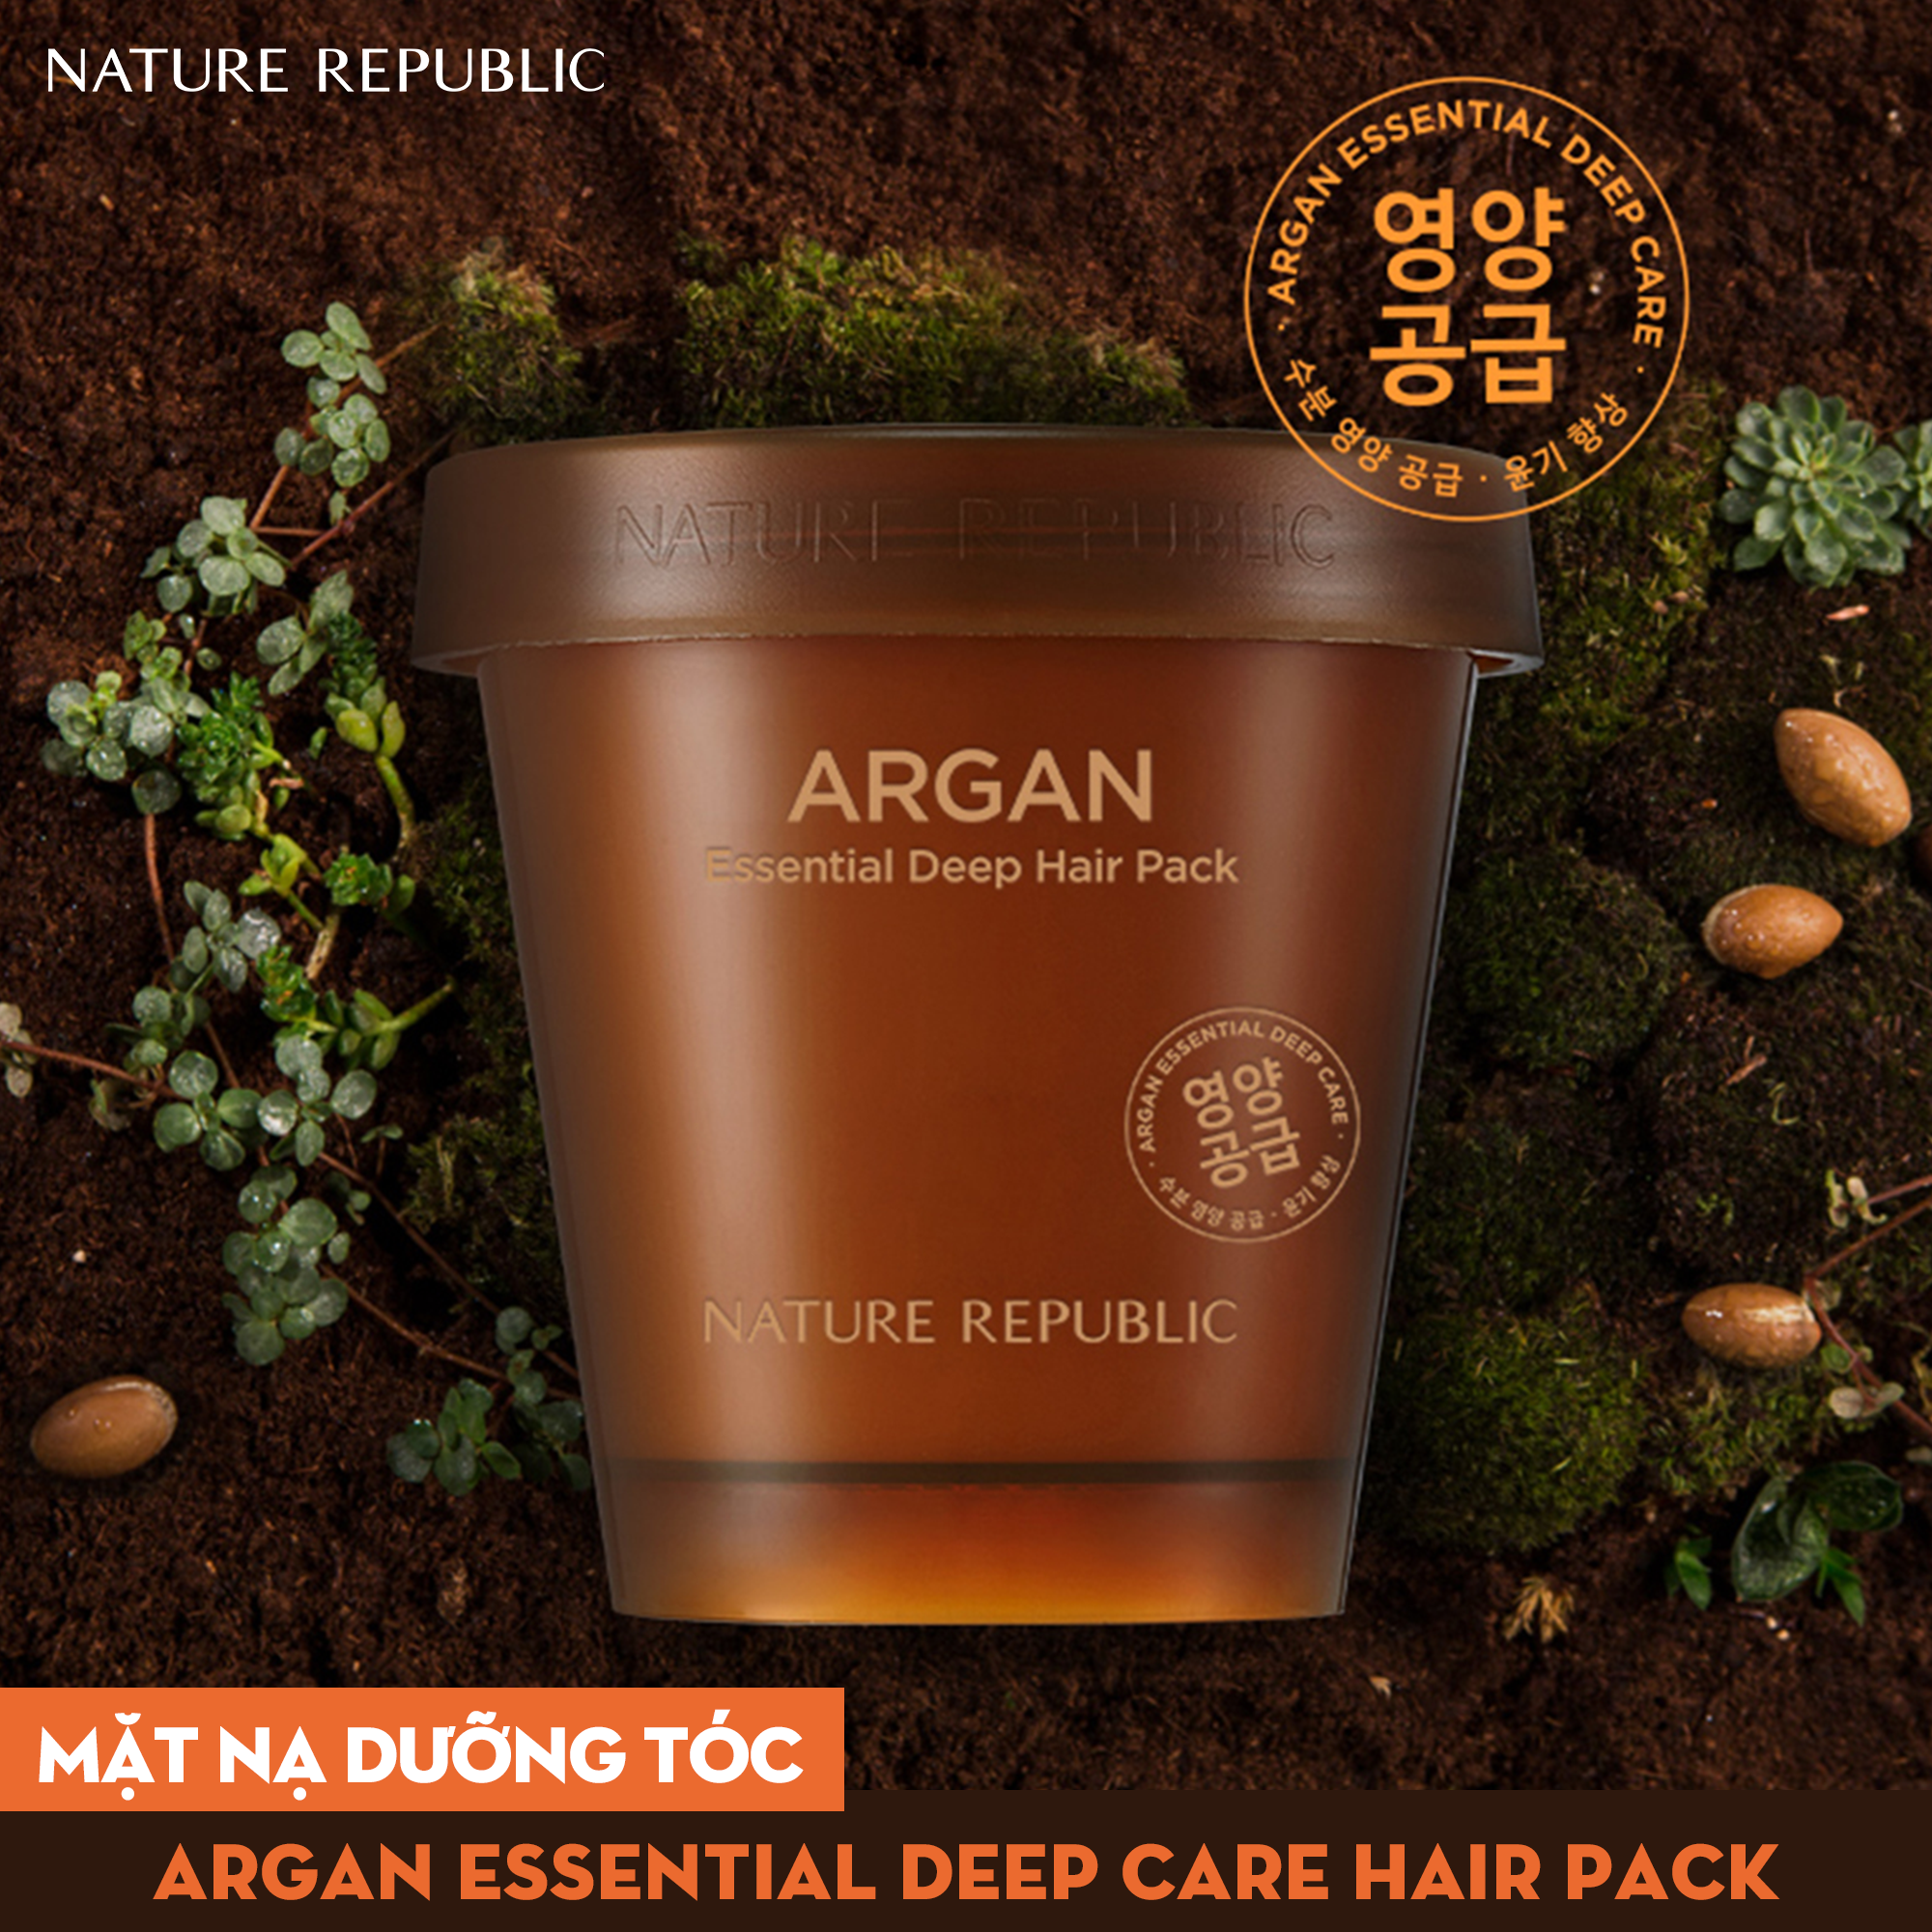  Nature Republic Mặt nạ dưỡng tóc Argan Essential Deep Care Hair Pack 200ml 